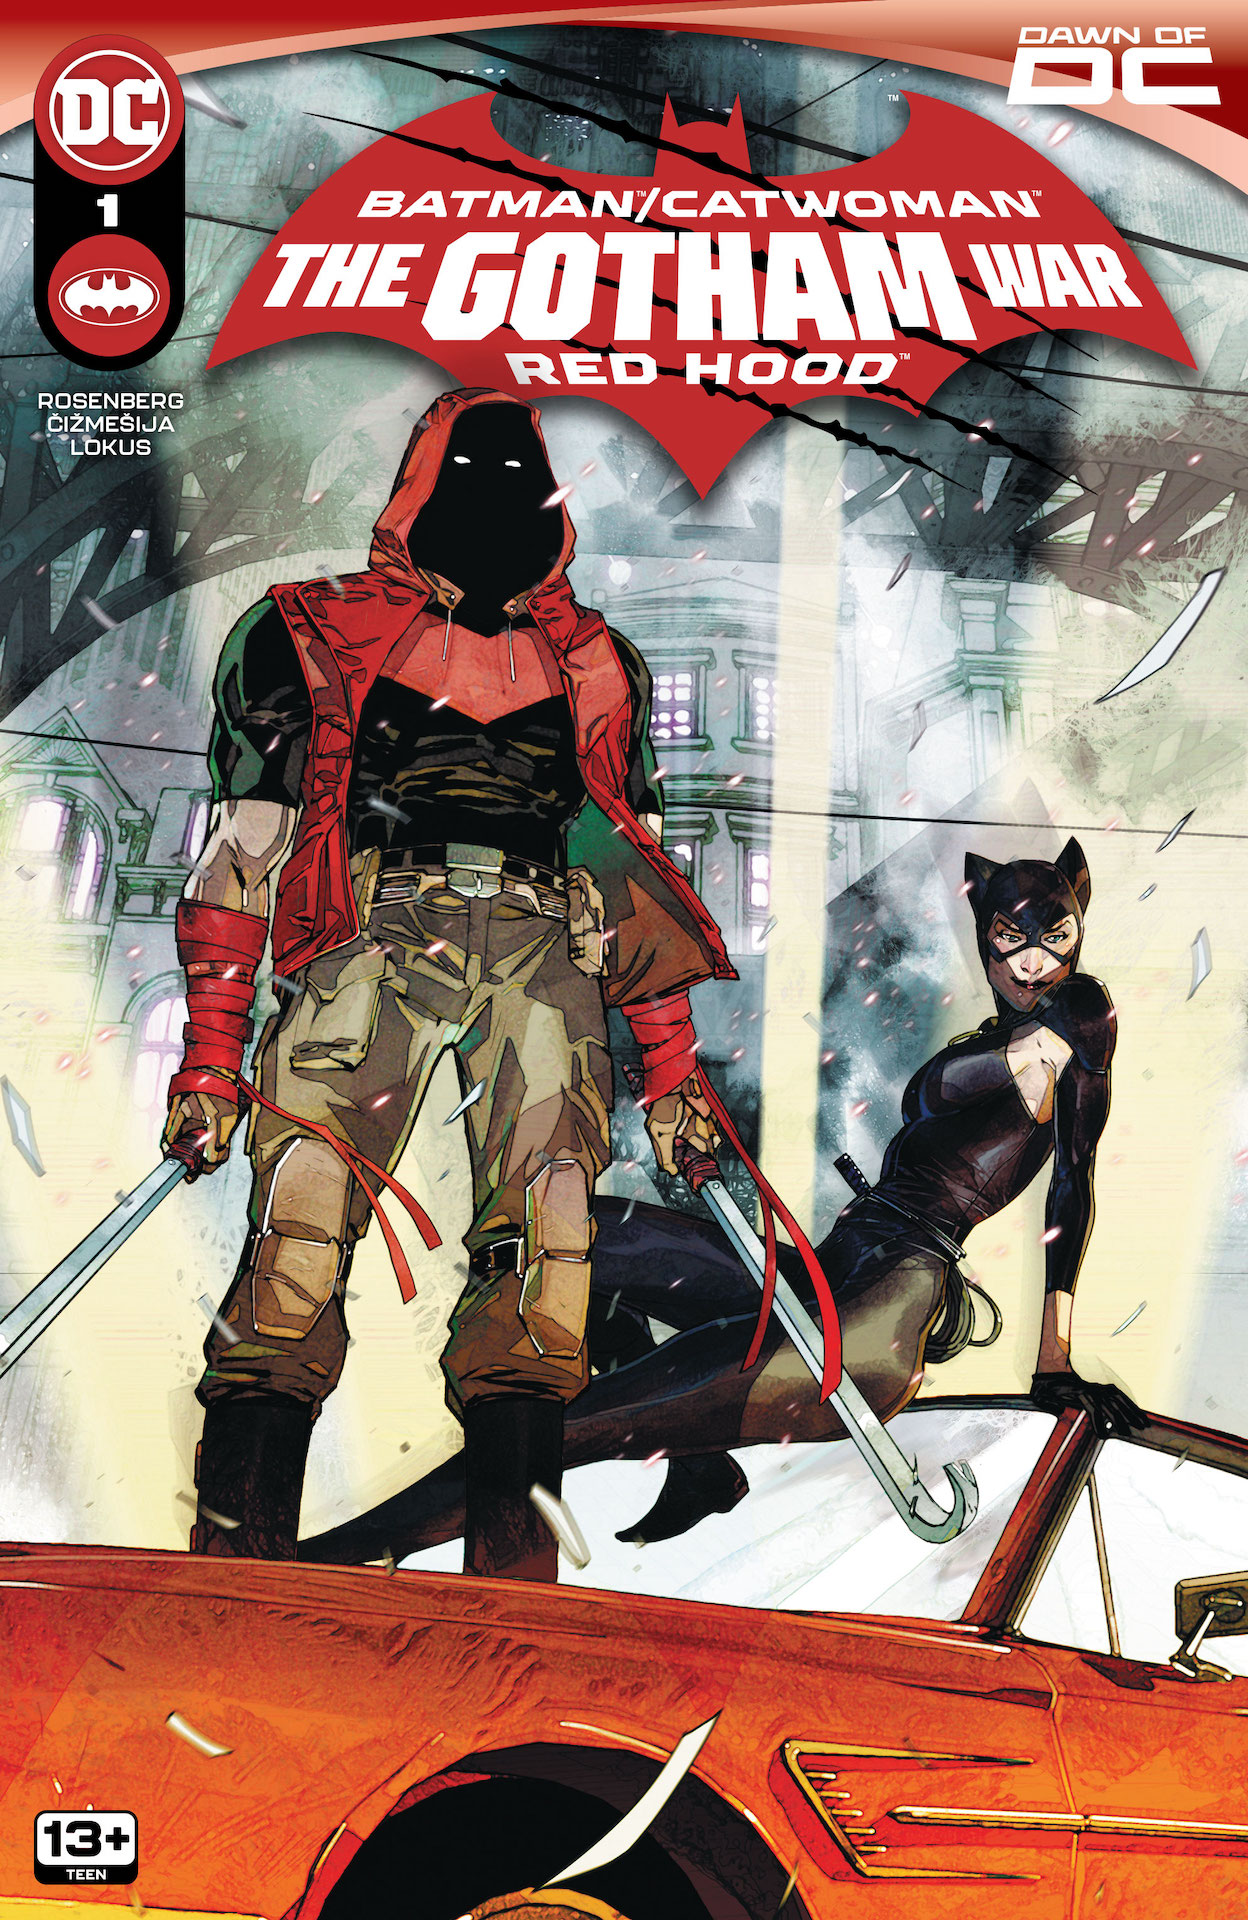 DC Preview: Batman / Catwoman: The Gotham War - Red Hood #1